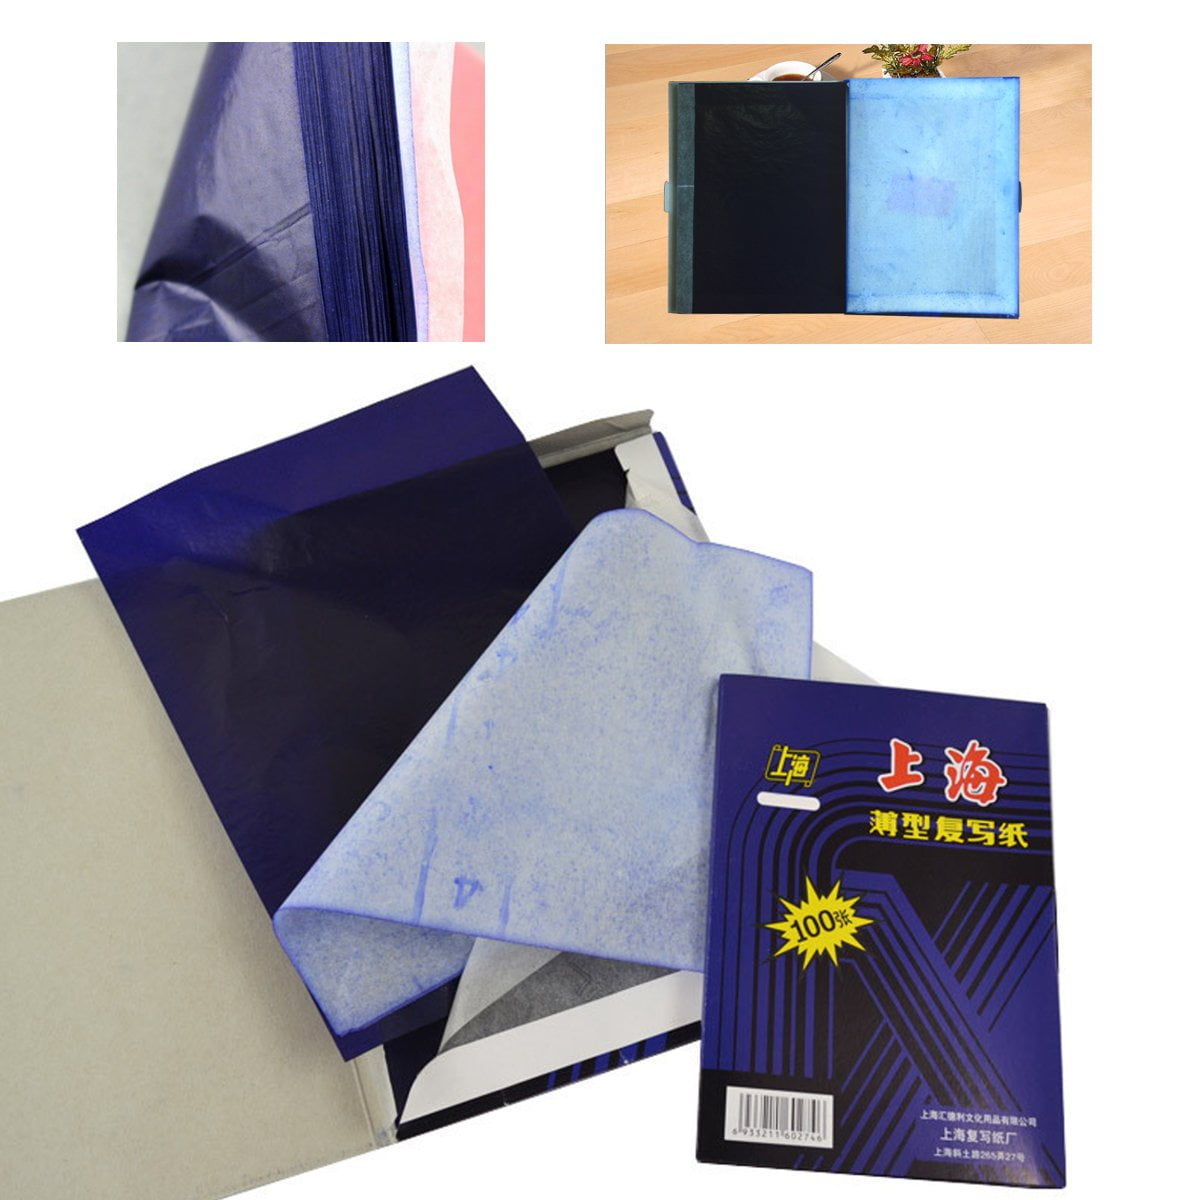 15 X A4 CARBON PAPER SHEETS HAND COPY BLUE 